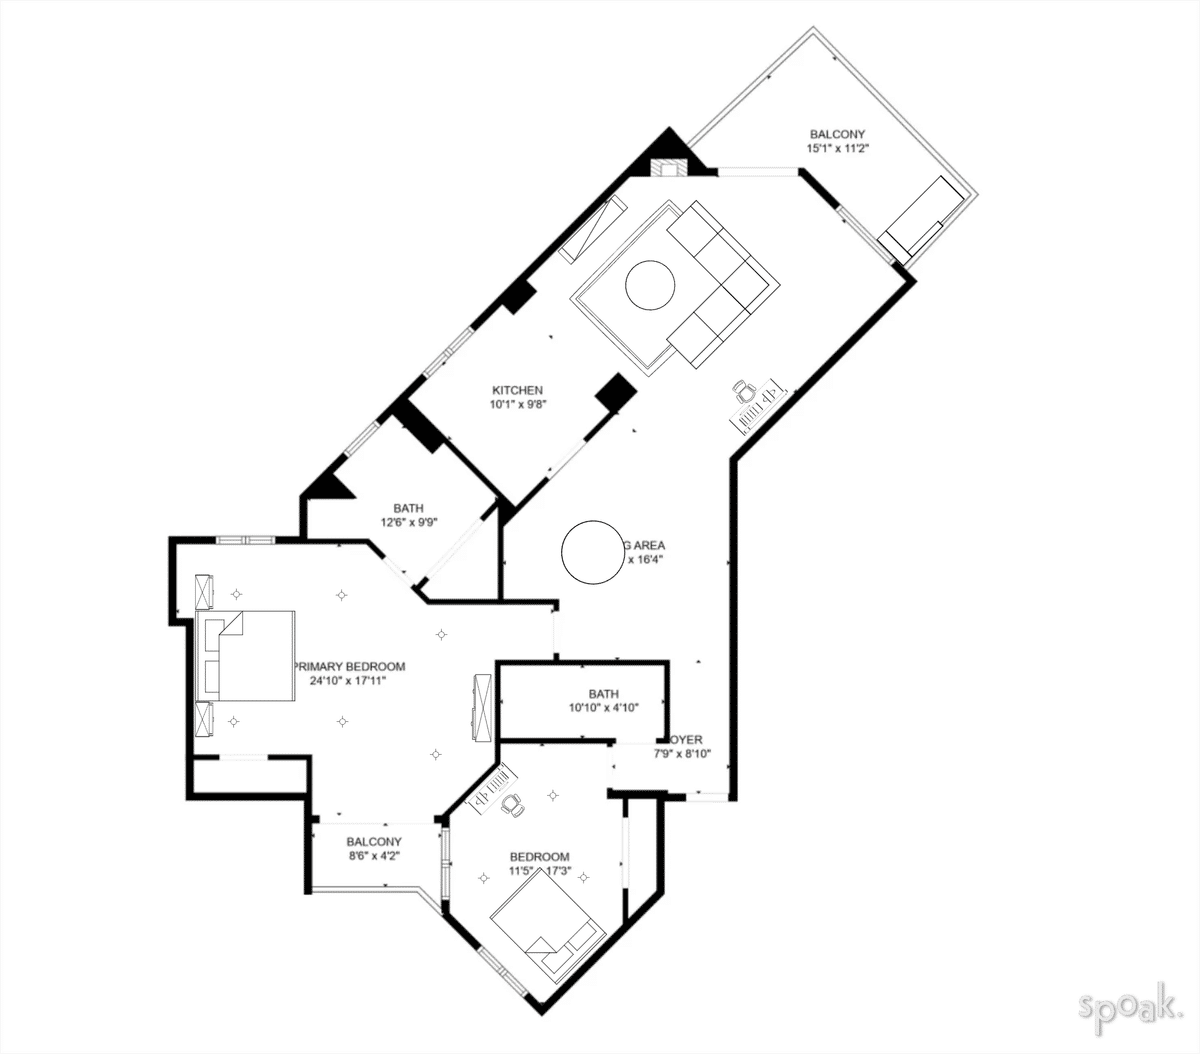 Apartment Floor Plan designed by Julia Quayle